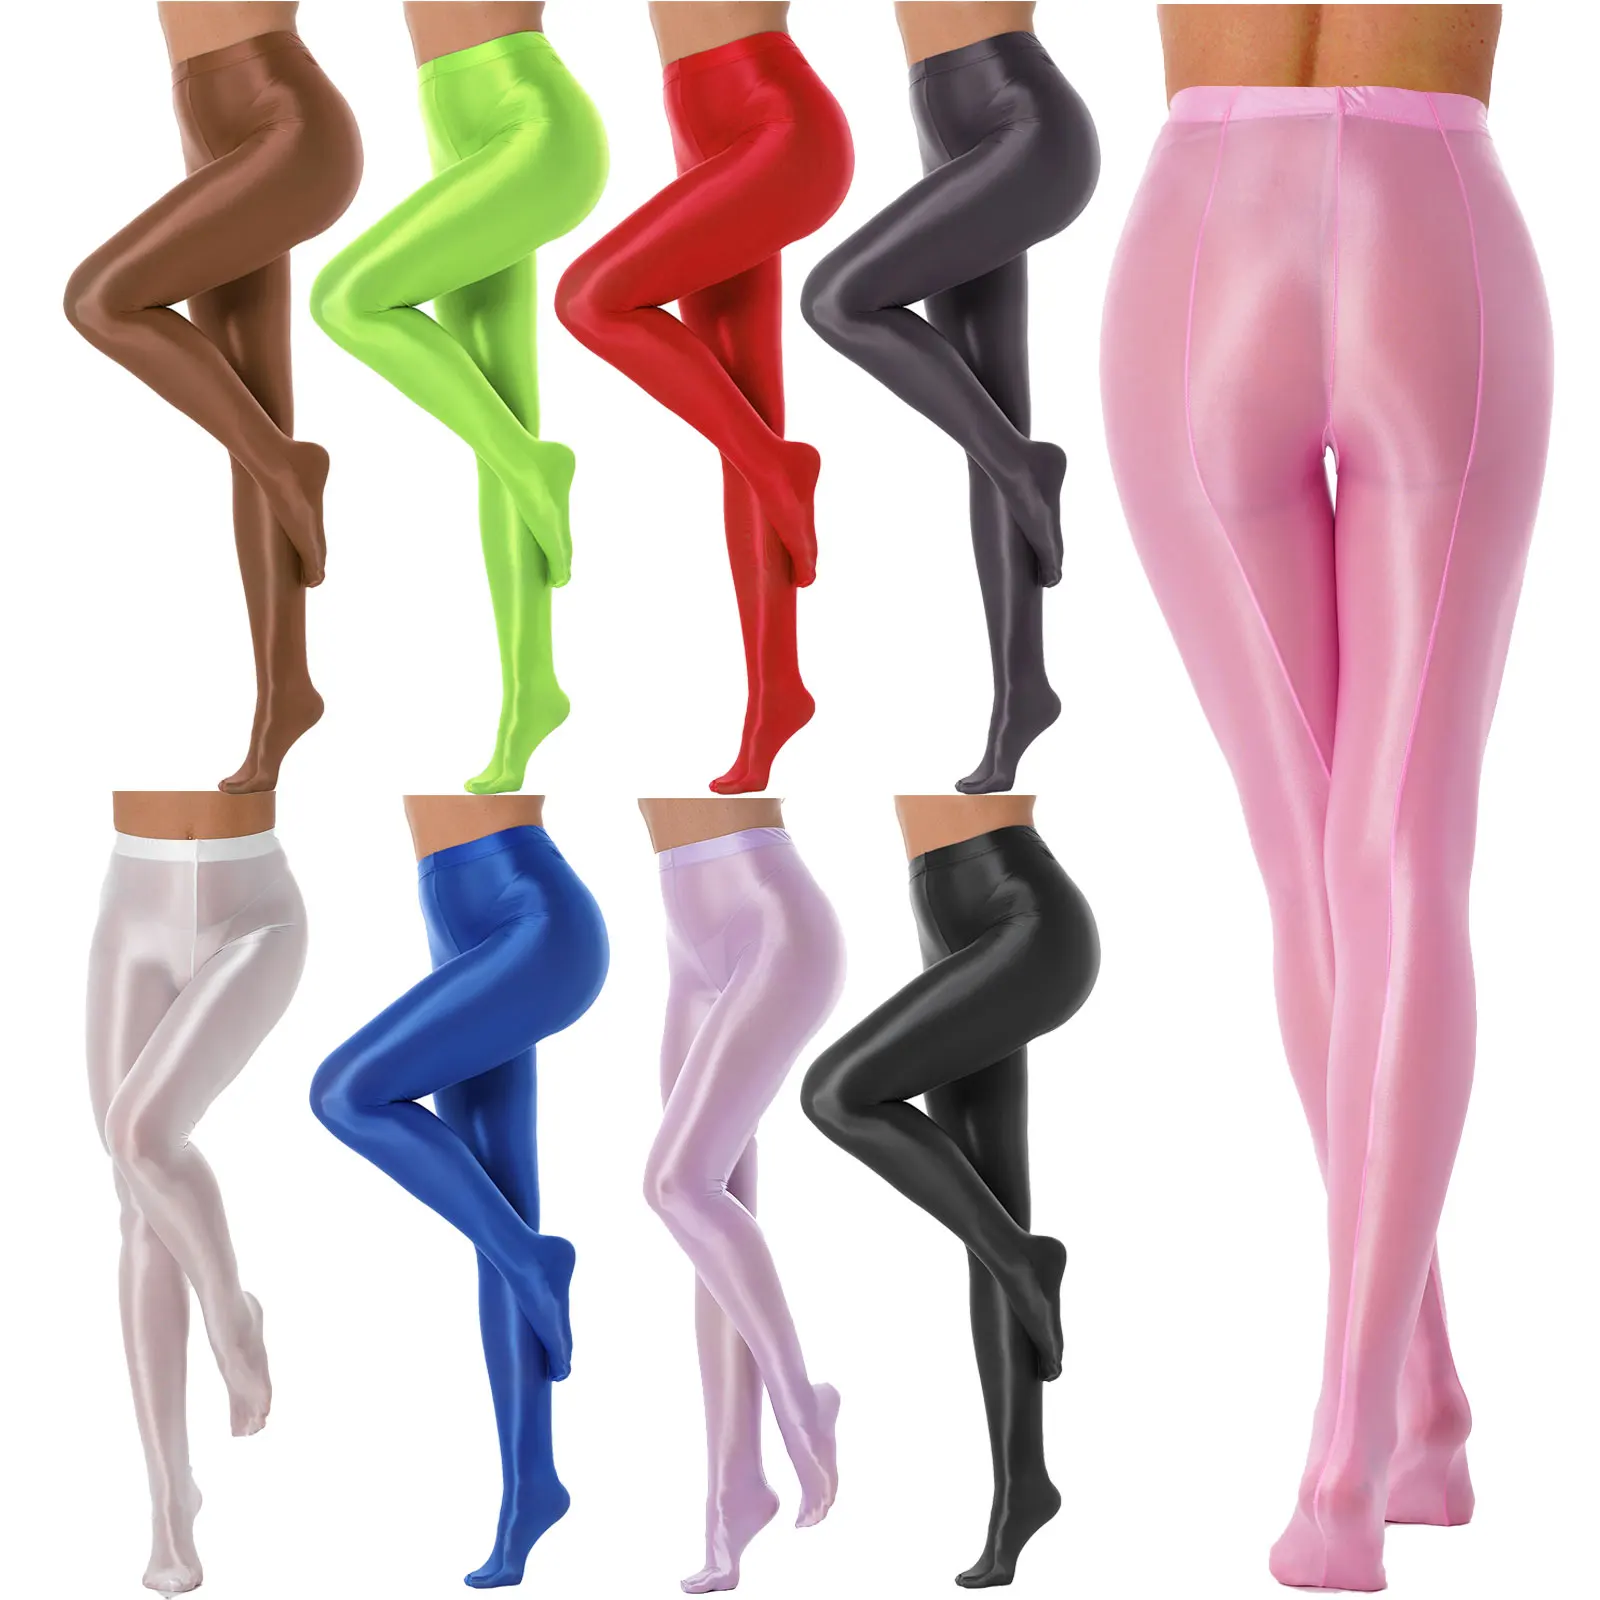 Women Fashion Glossy Pantyhose Yoga Leggings Pants Ballet Dance Training Bottoms Fitness Workout Sports Trousers Tights